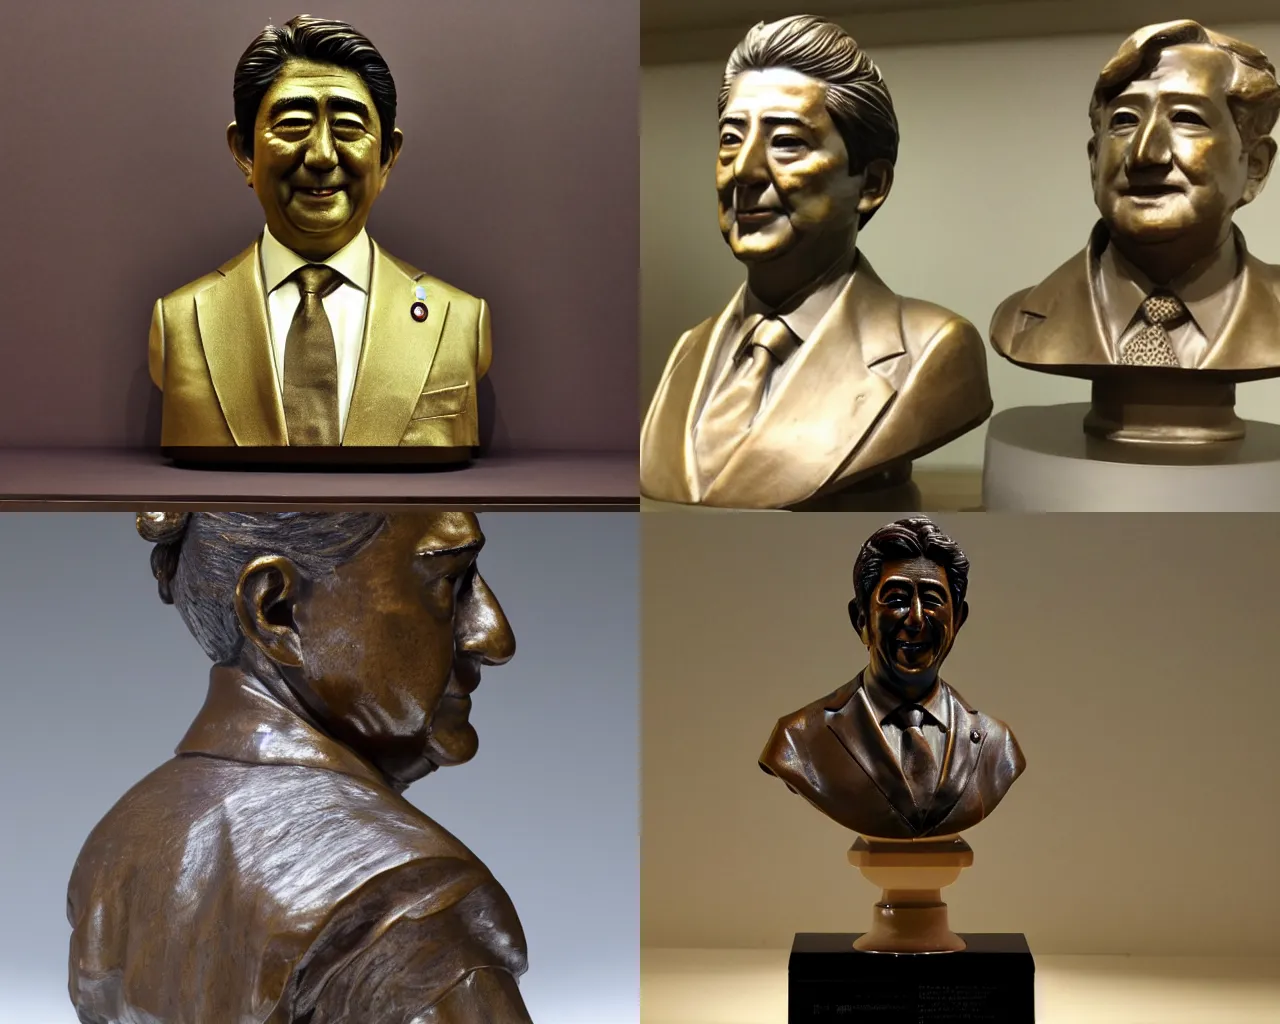 Prompt: A luminous bronze bust of Shinzo Abe